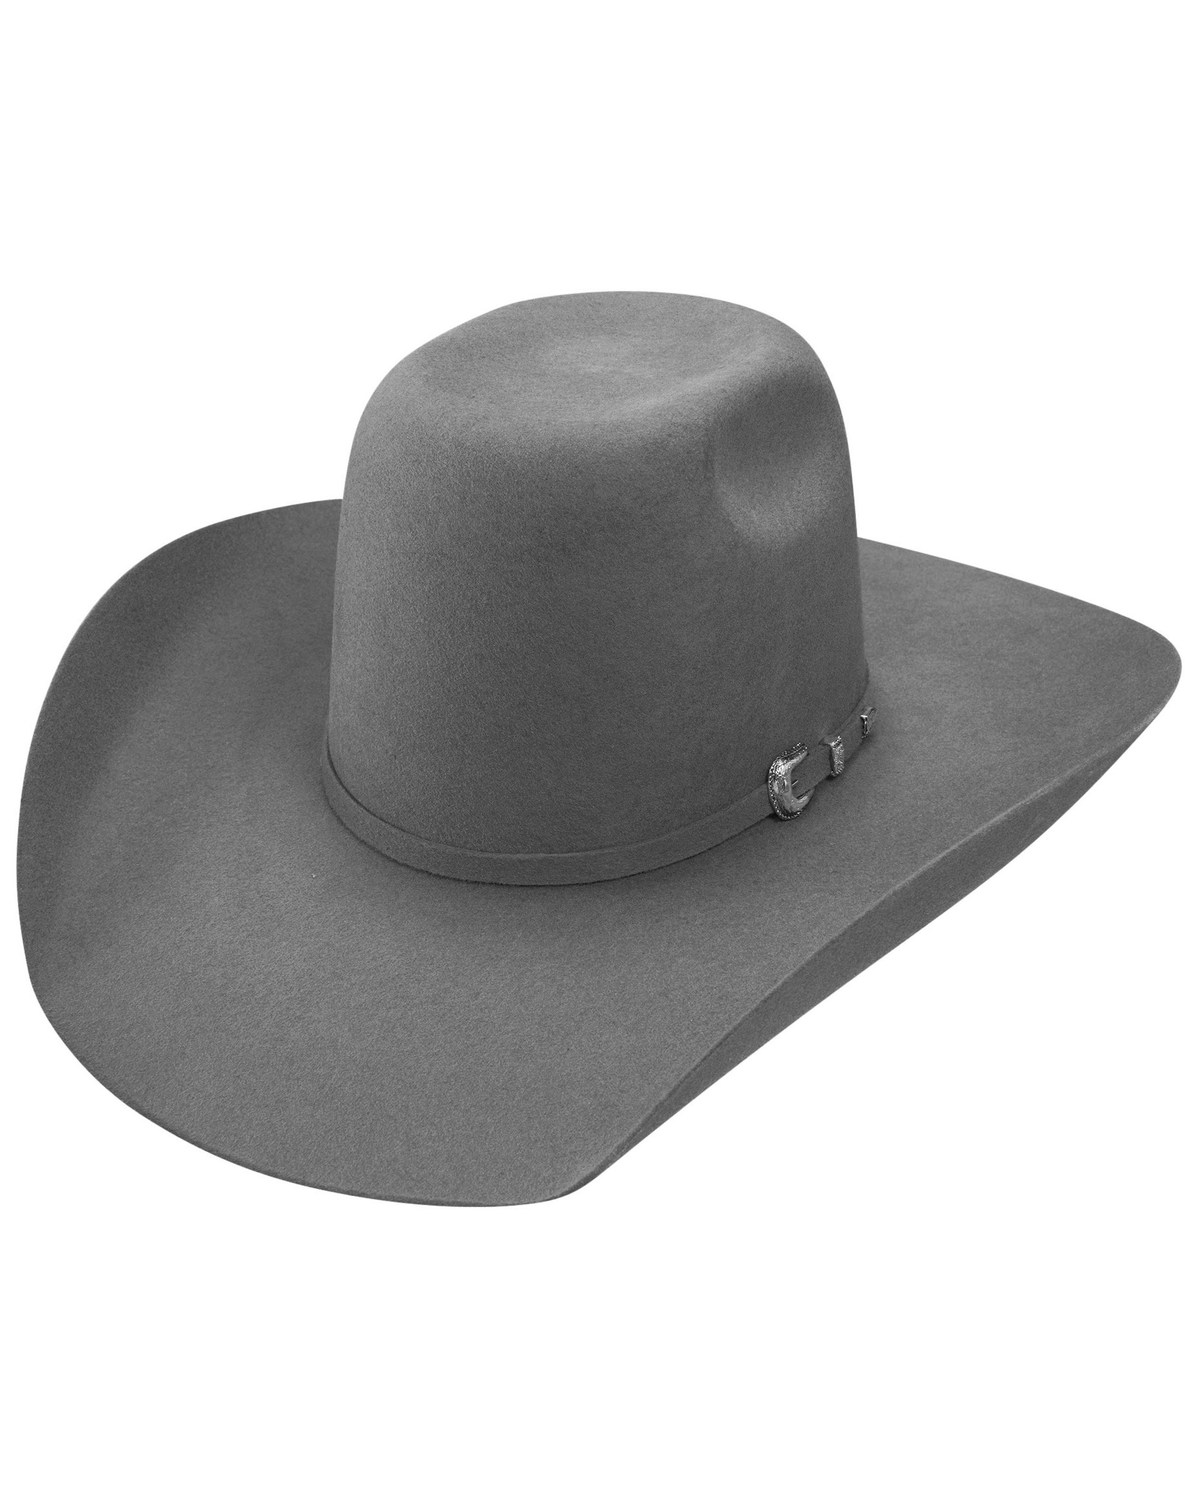 Resistol Kids' Pay Window Jr. Felt Cowboy Hat